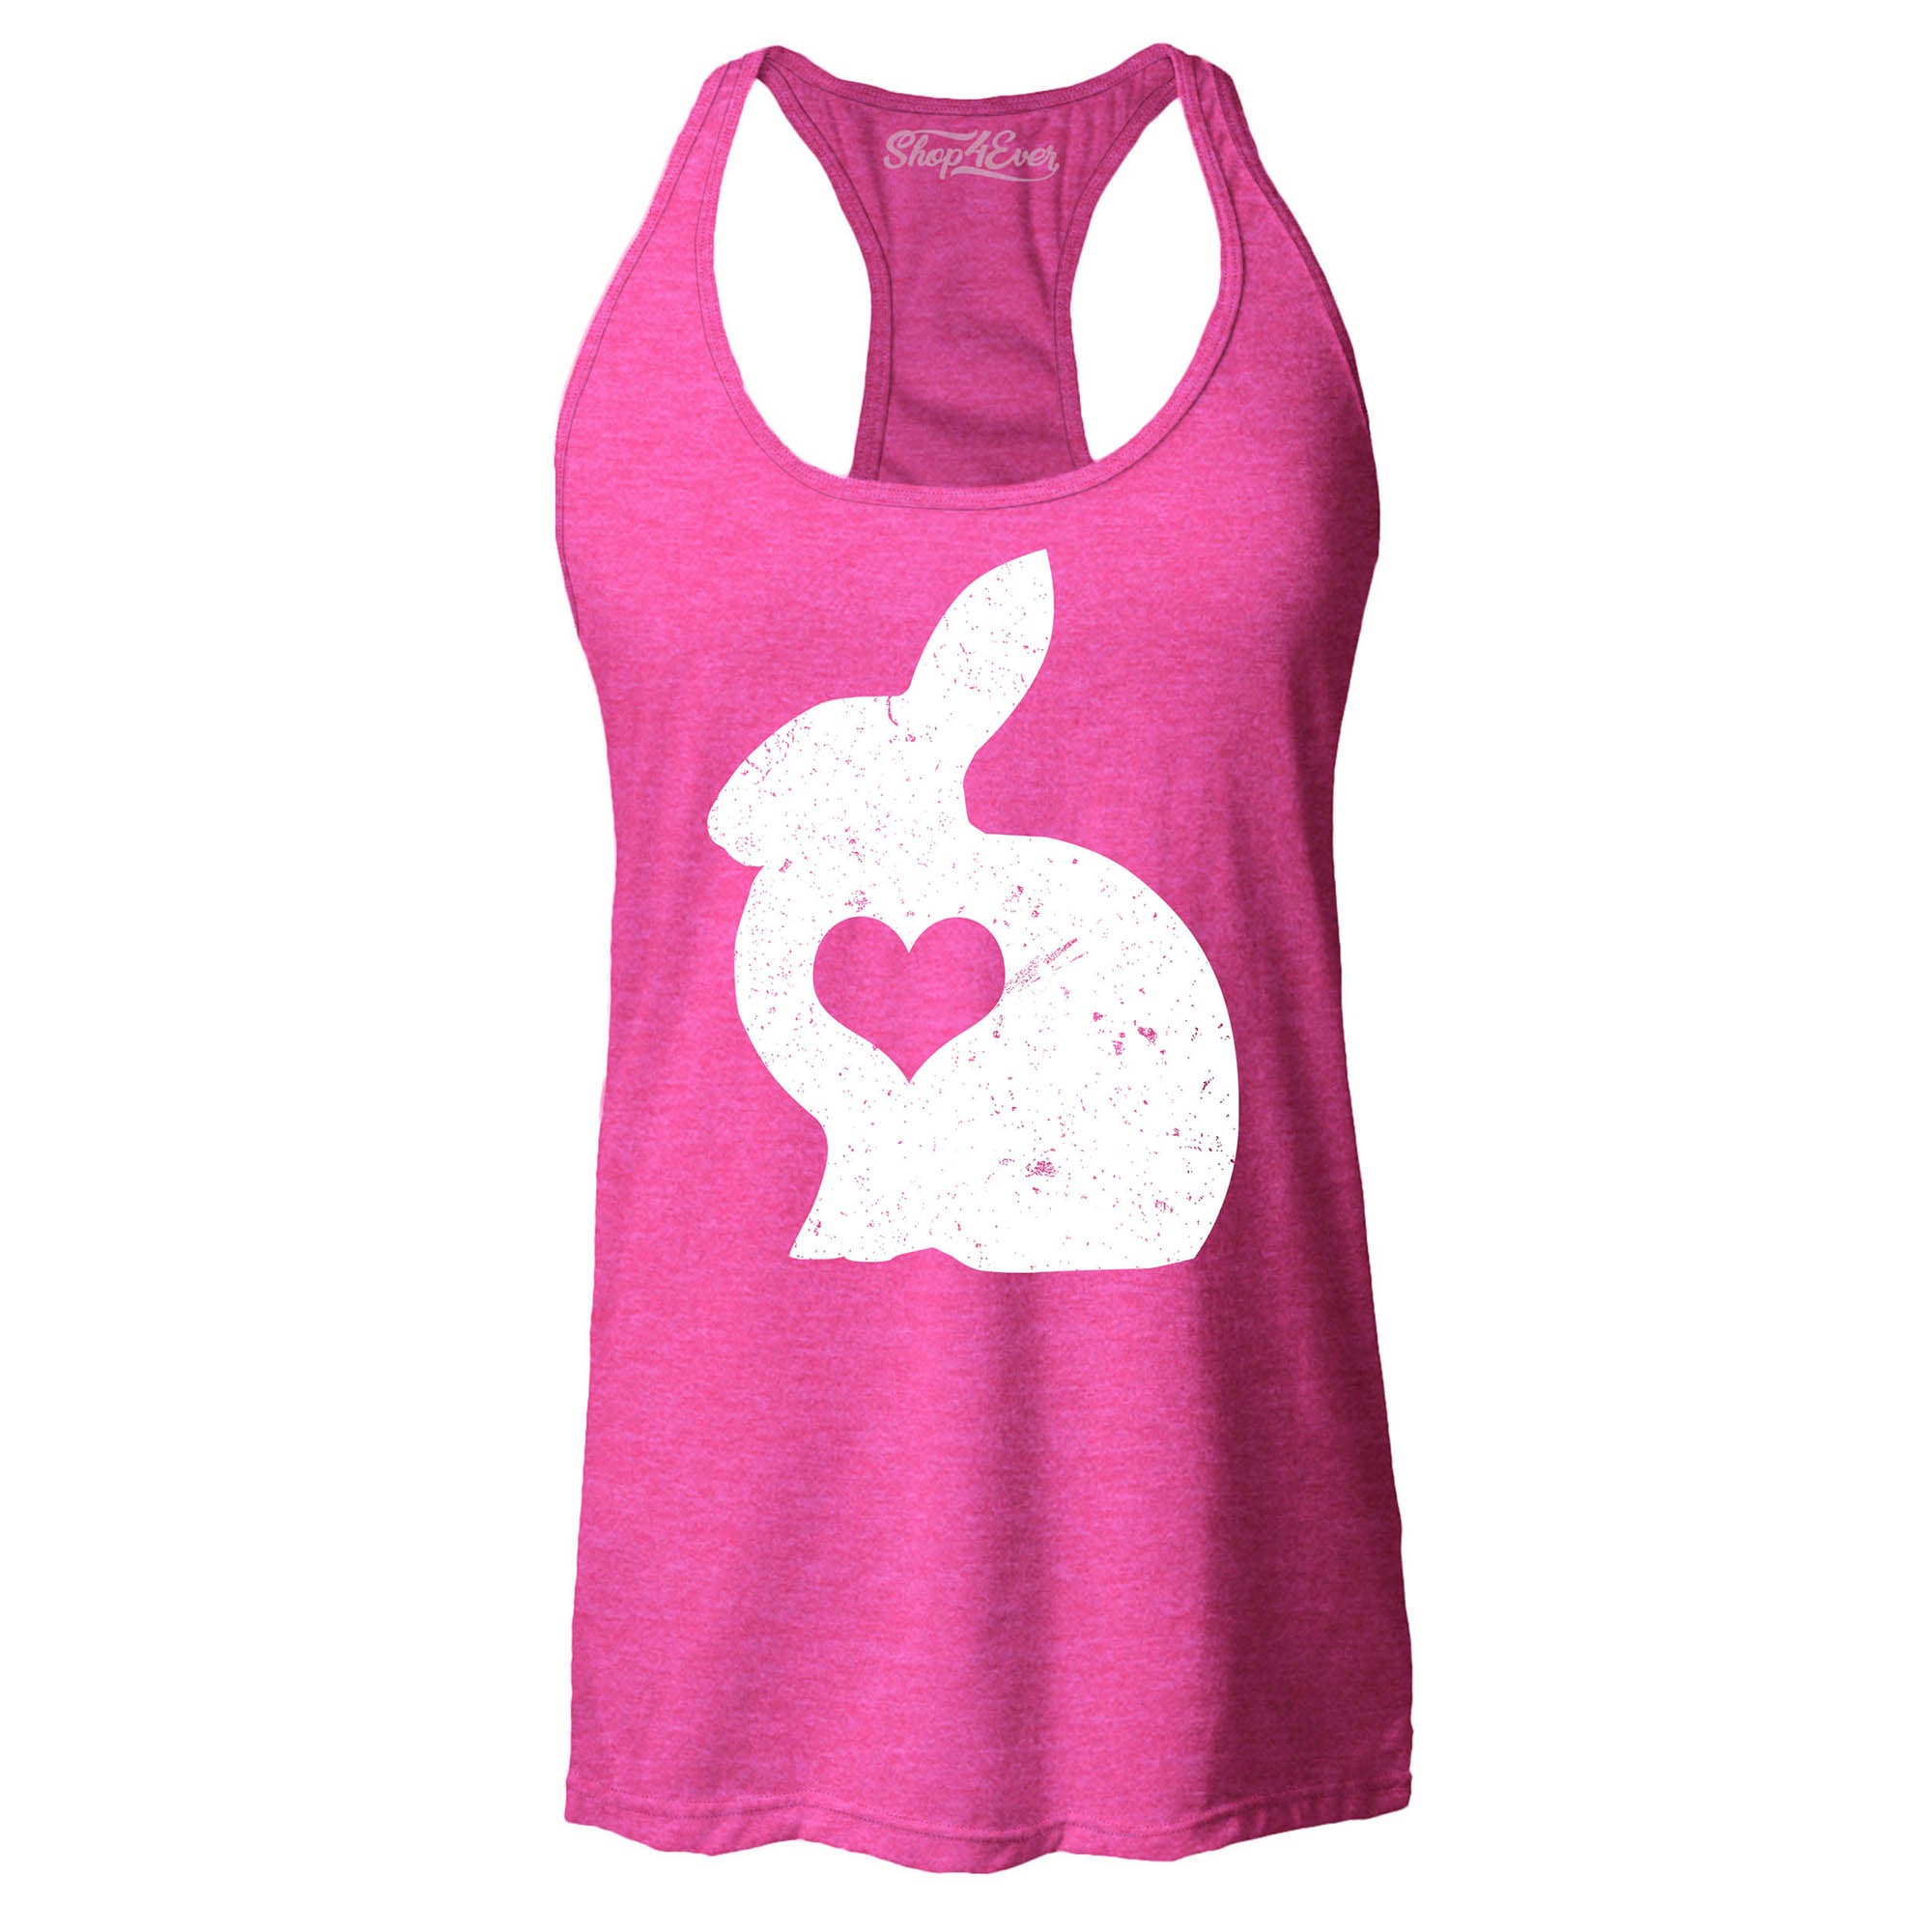 Easter Bunny Rabbit with Heart Women's Racerback Tank Top Slim Fit